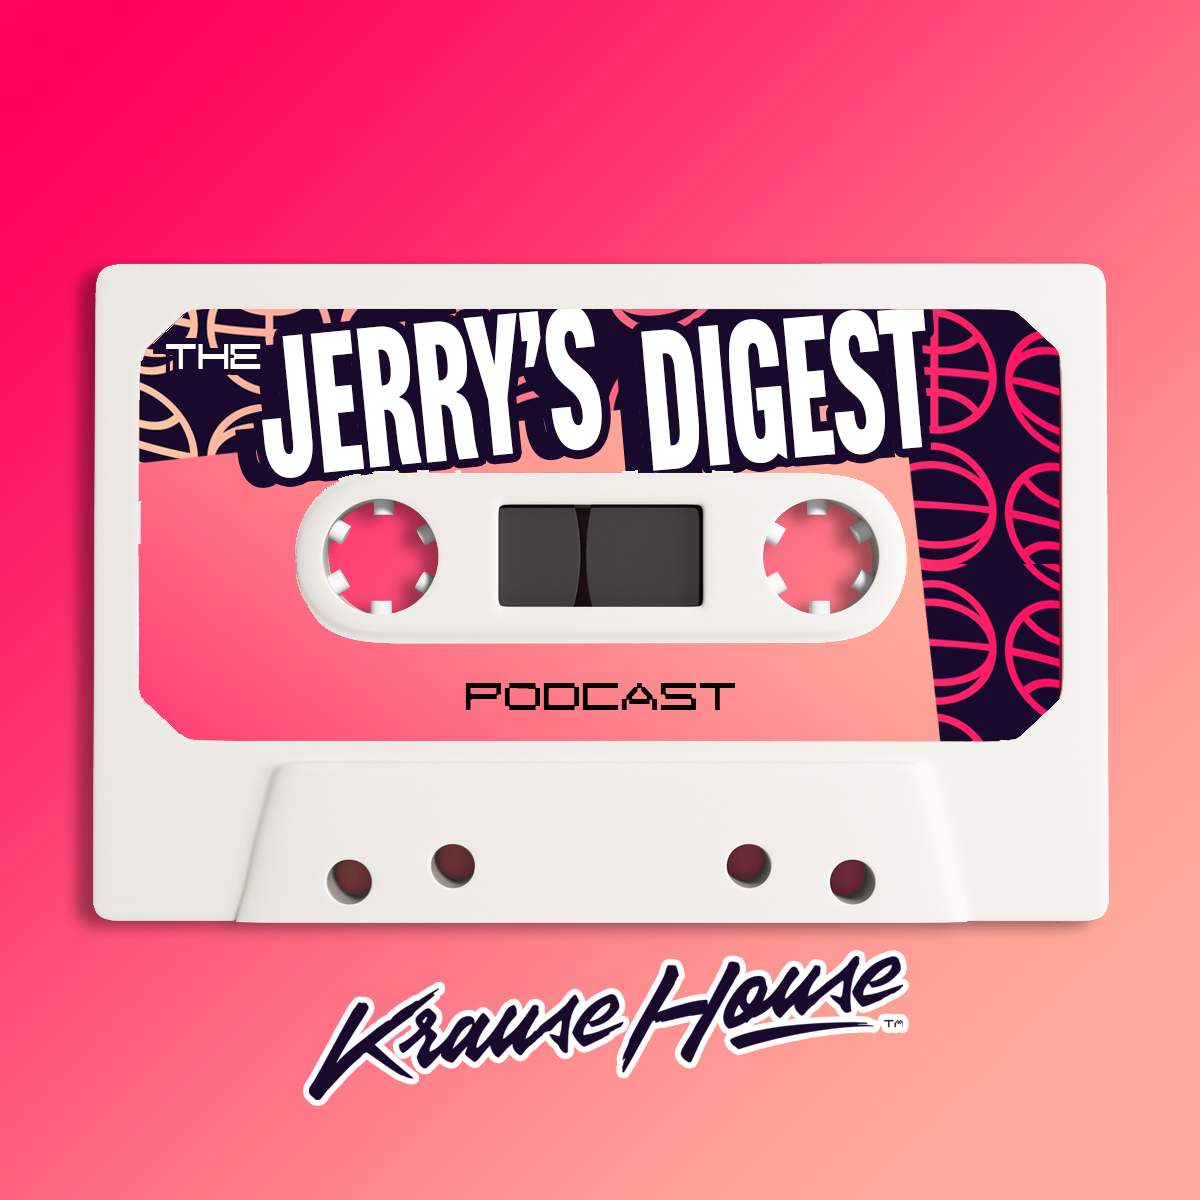 Jerry's Digest